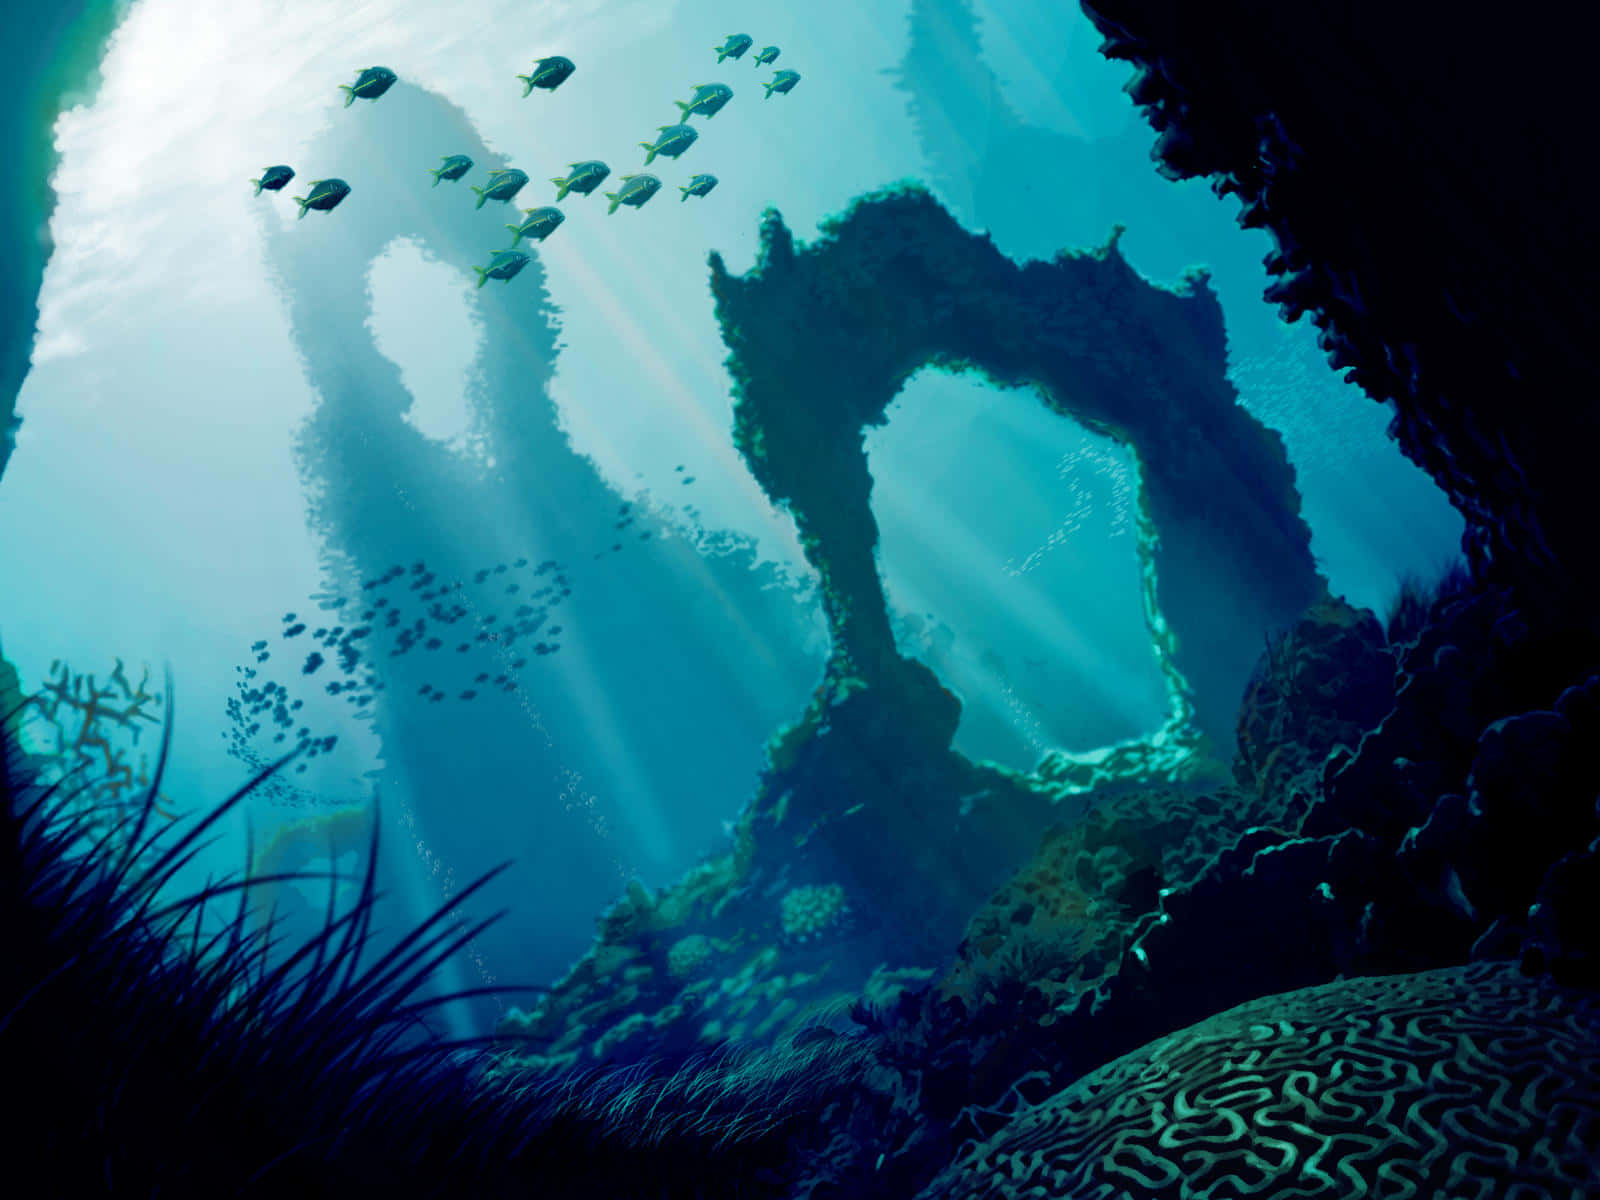 Spooky Underwater Scene with Jagged Rocks